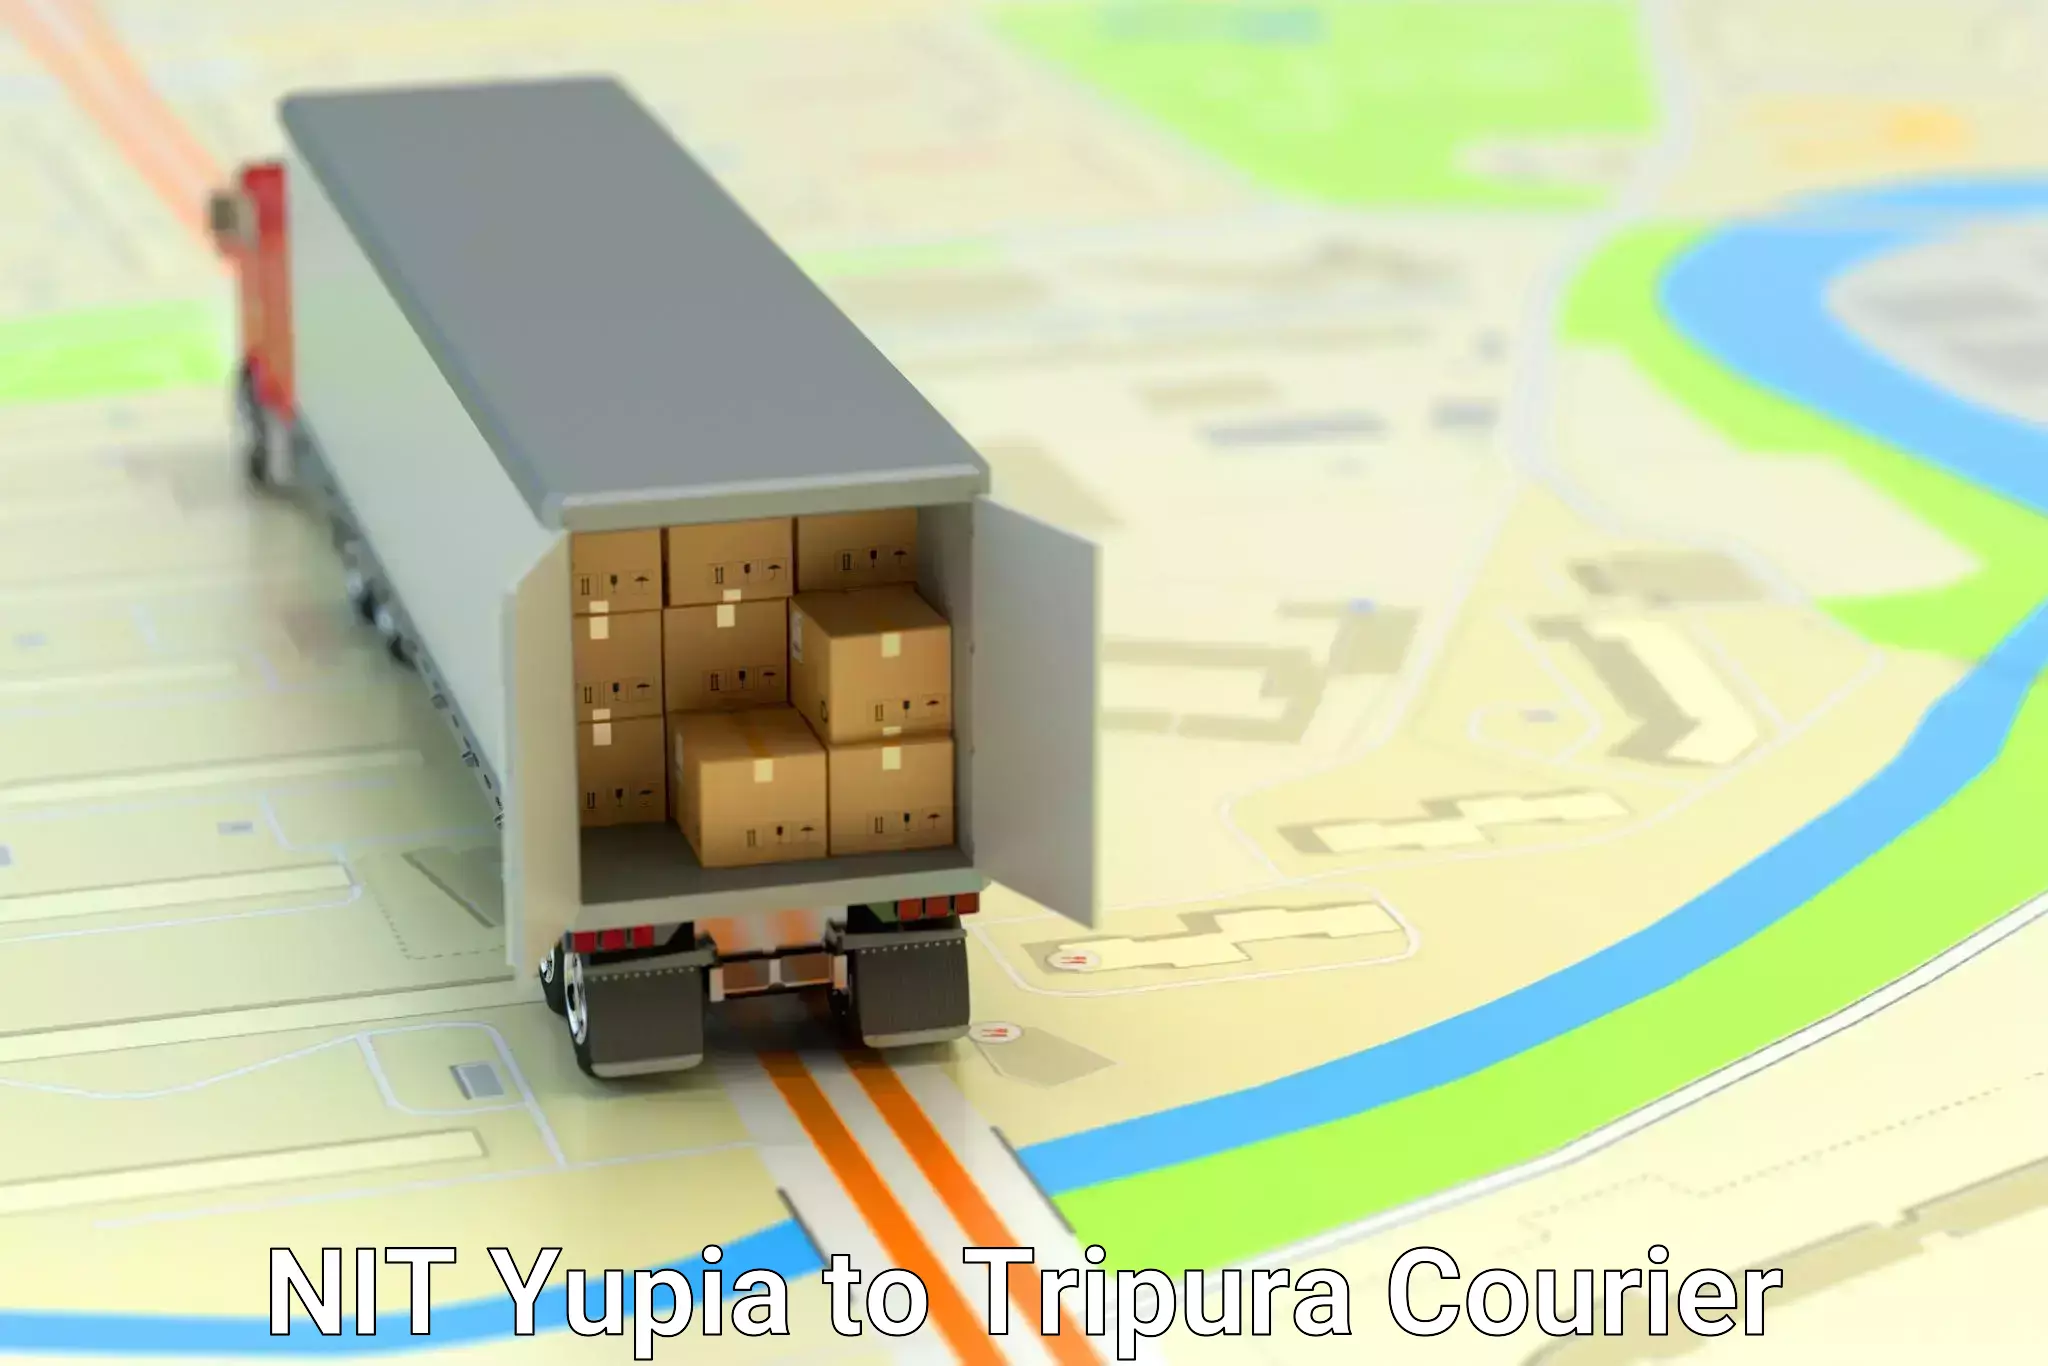 Courier service partnerships NIT Yupia to Tripura